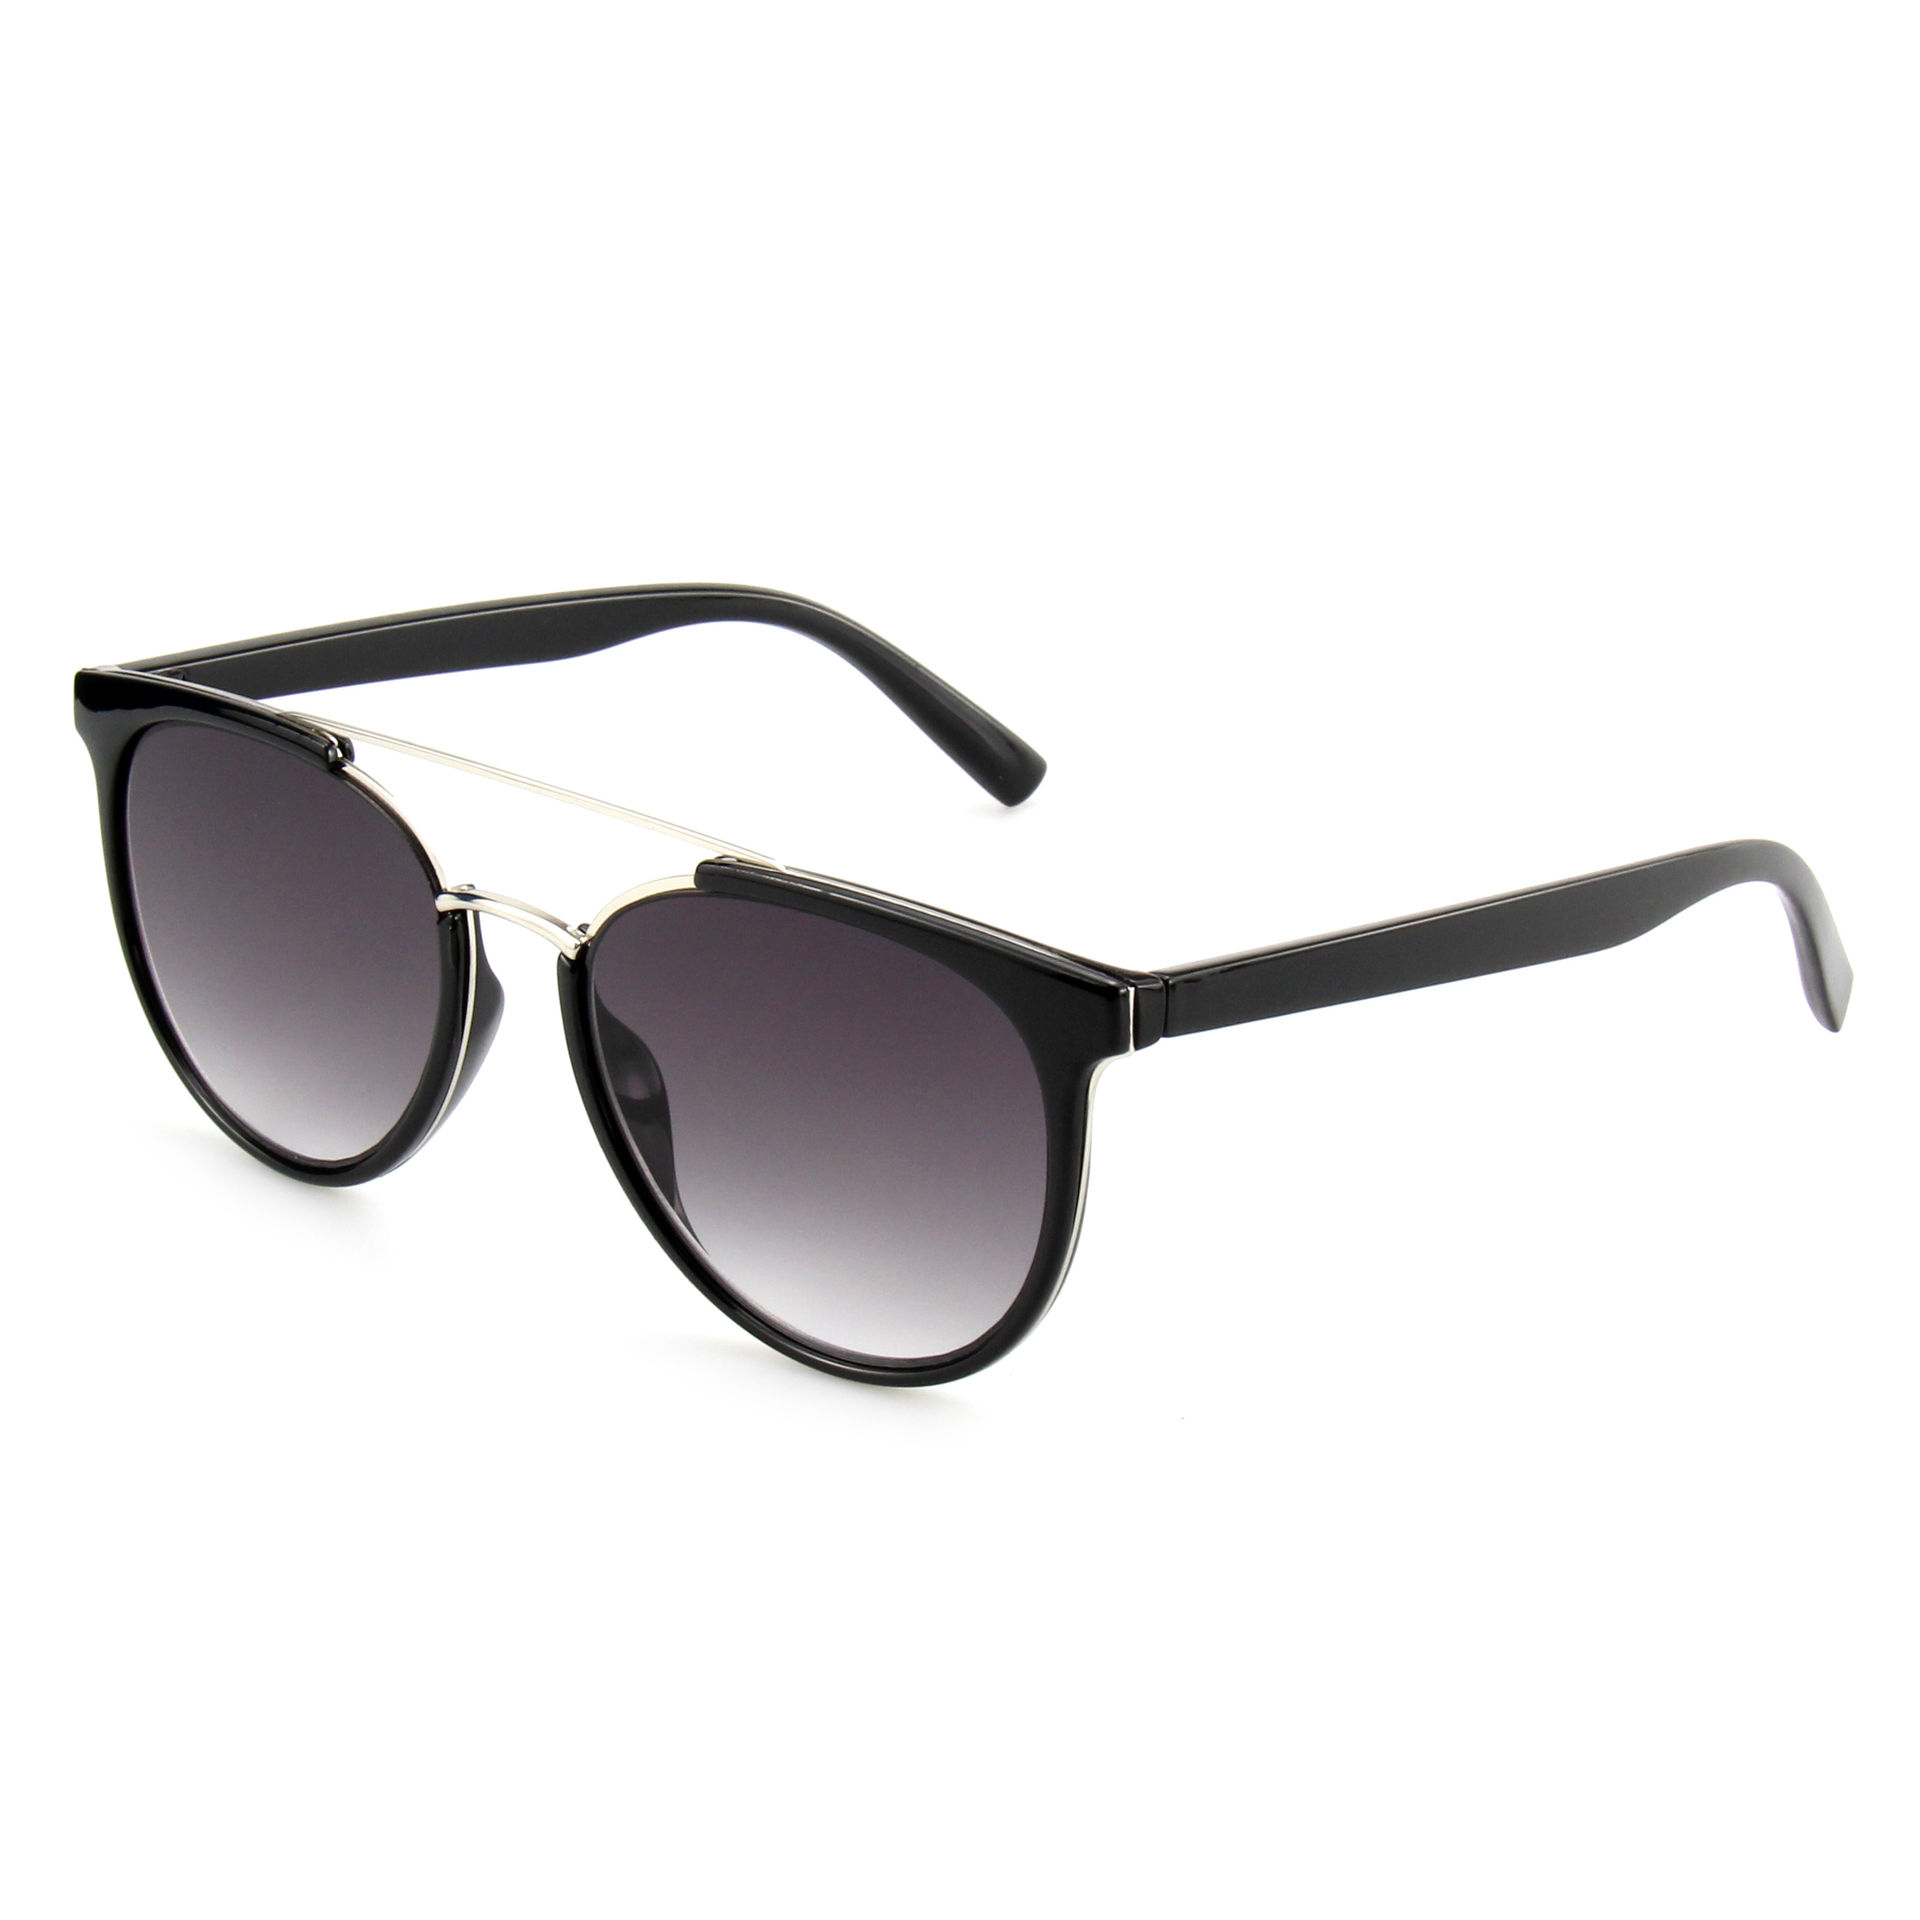 2021 Fashion Sunglasses Latest Fashion CE UV400 Vintage PC Metal Round Sunglasses Men Women Luxury